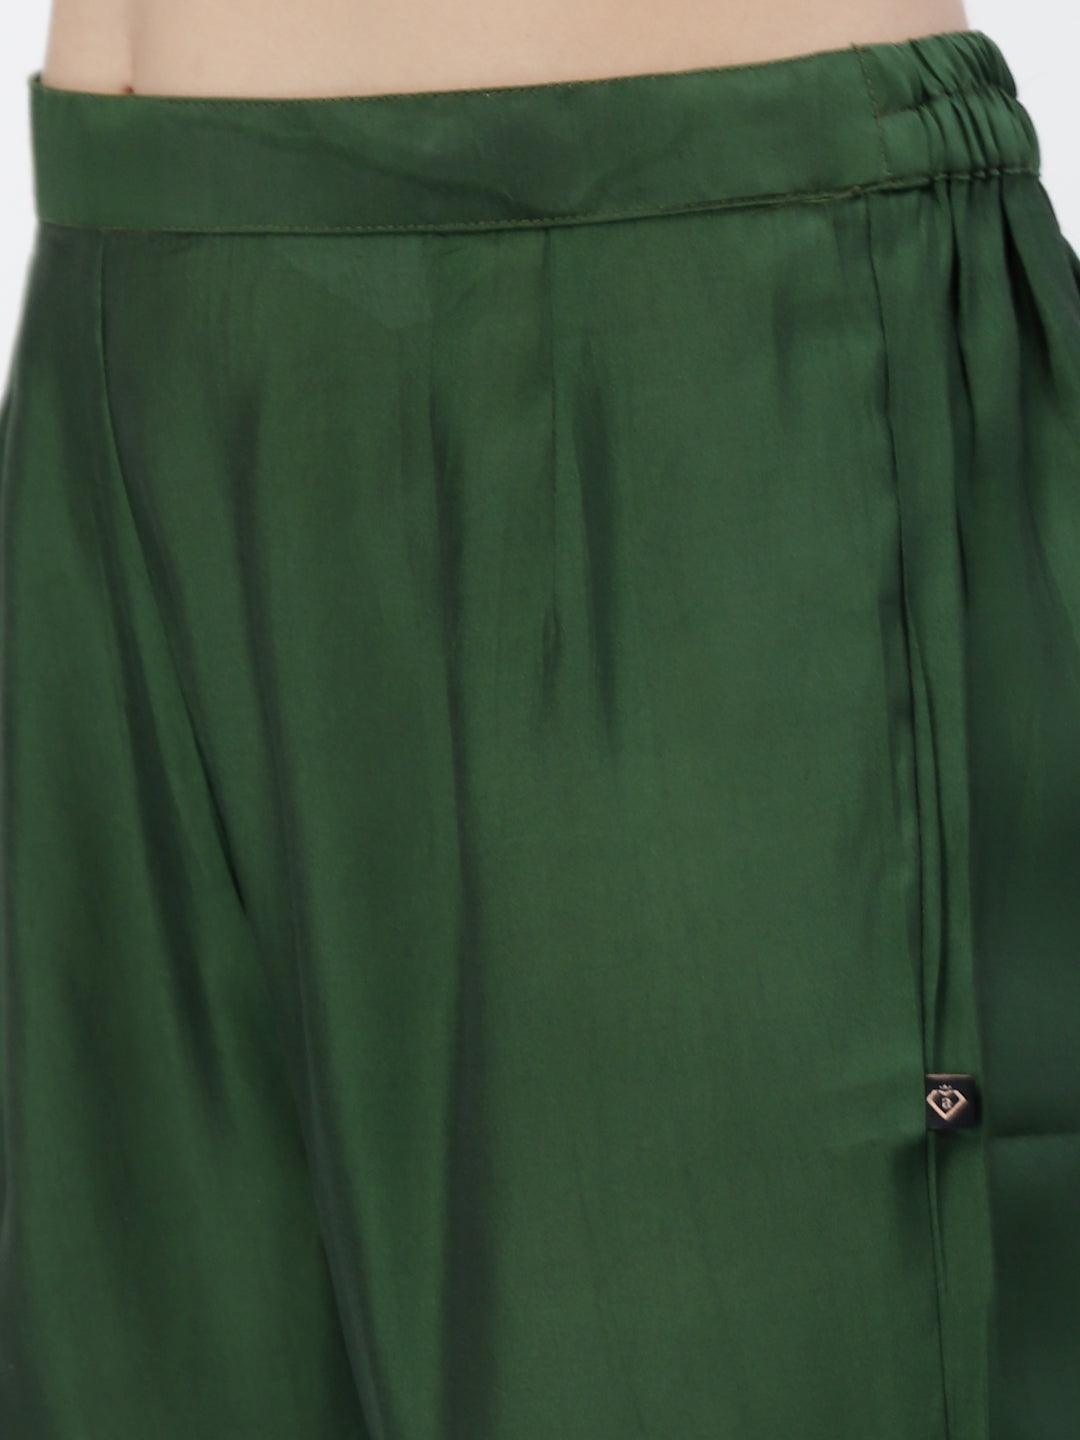 Green Embellished Gathered Kurta, Dupatta & Trouser Set - ARH841